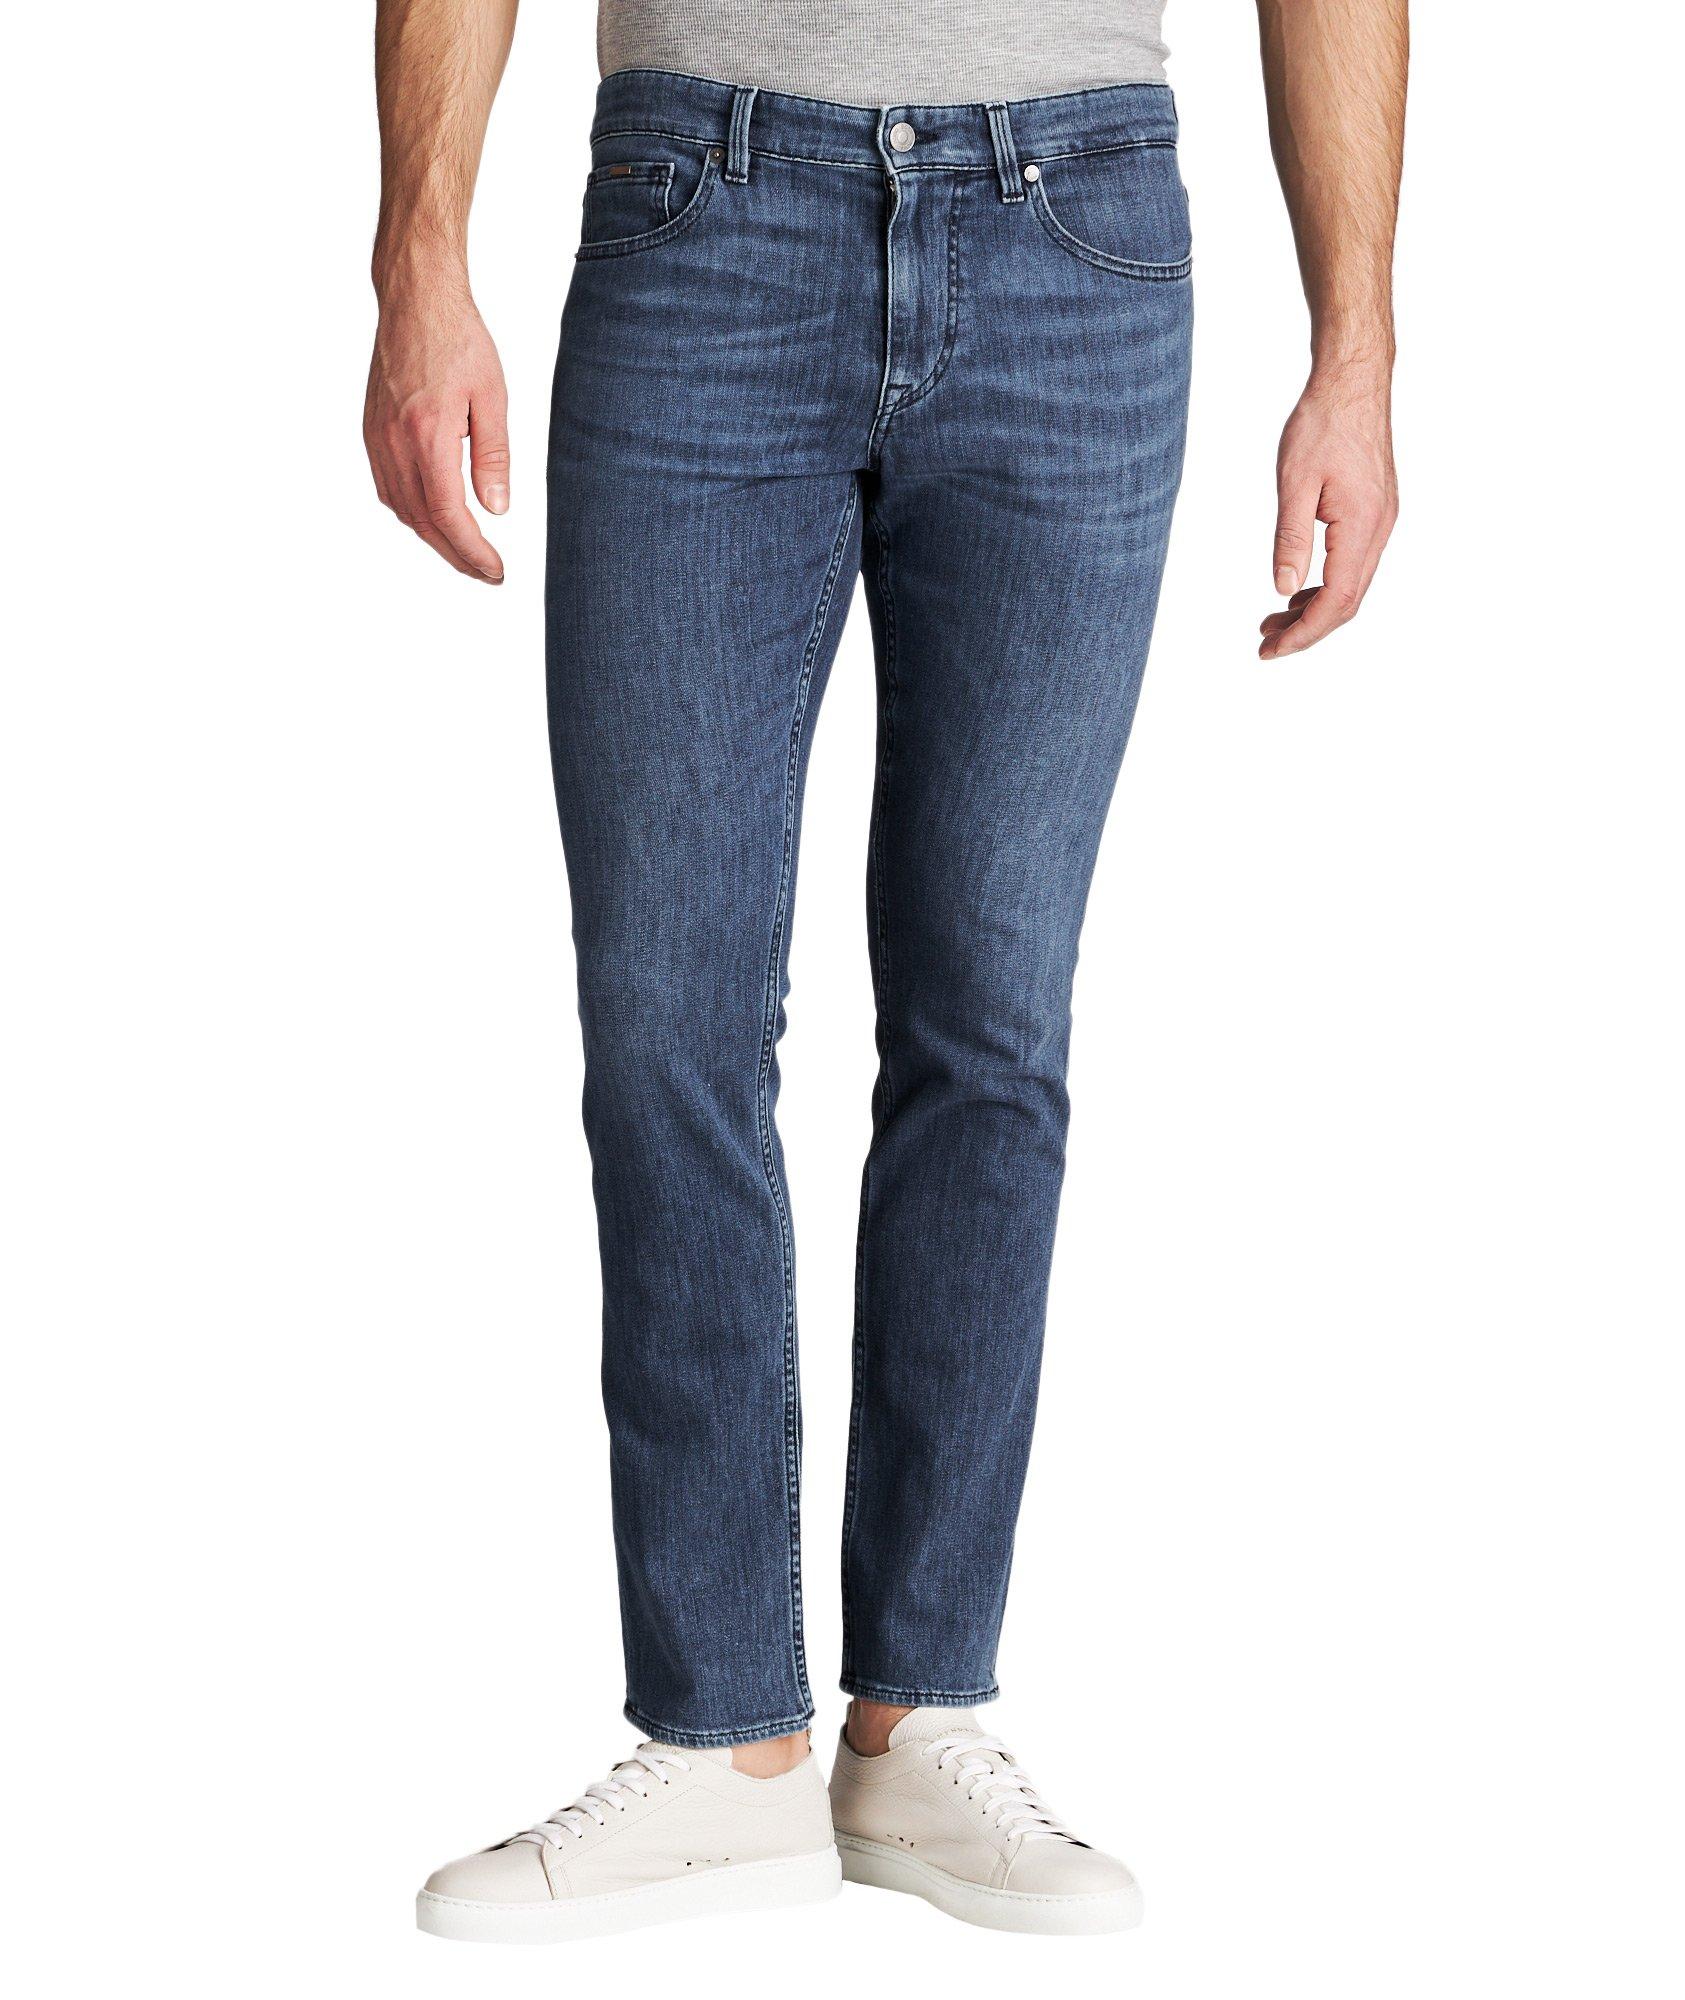 Charleston Extra-Slim Fit Jeans image 0